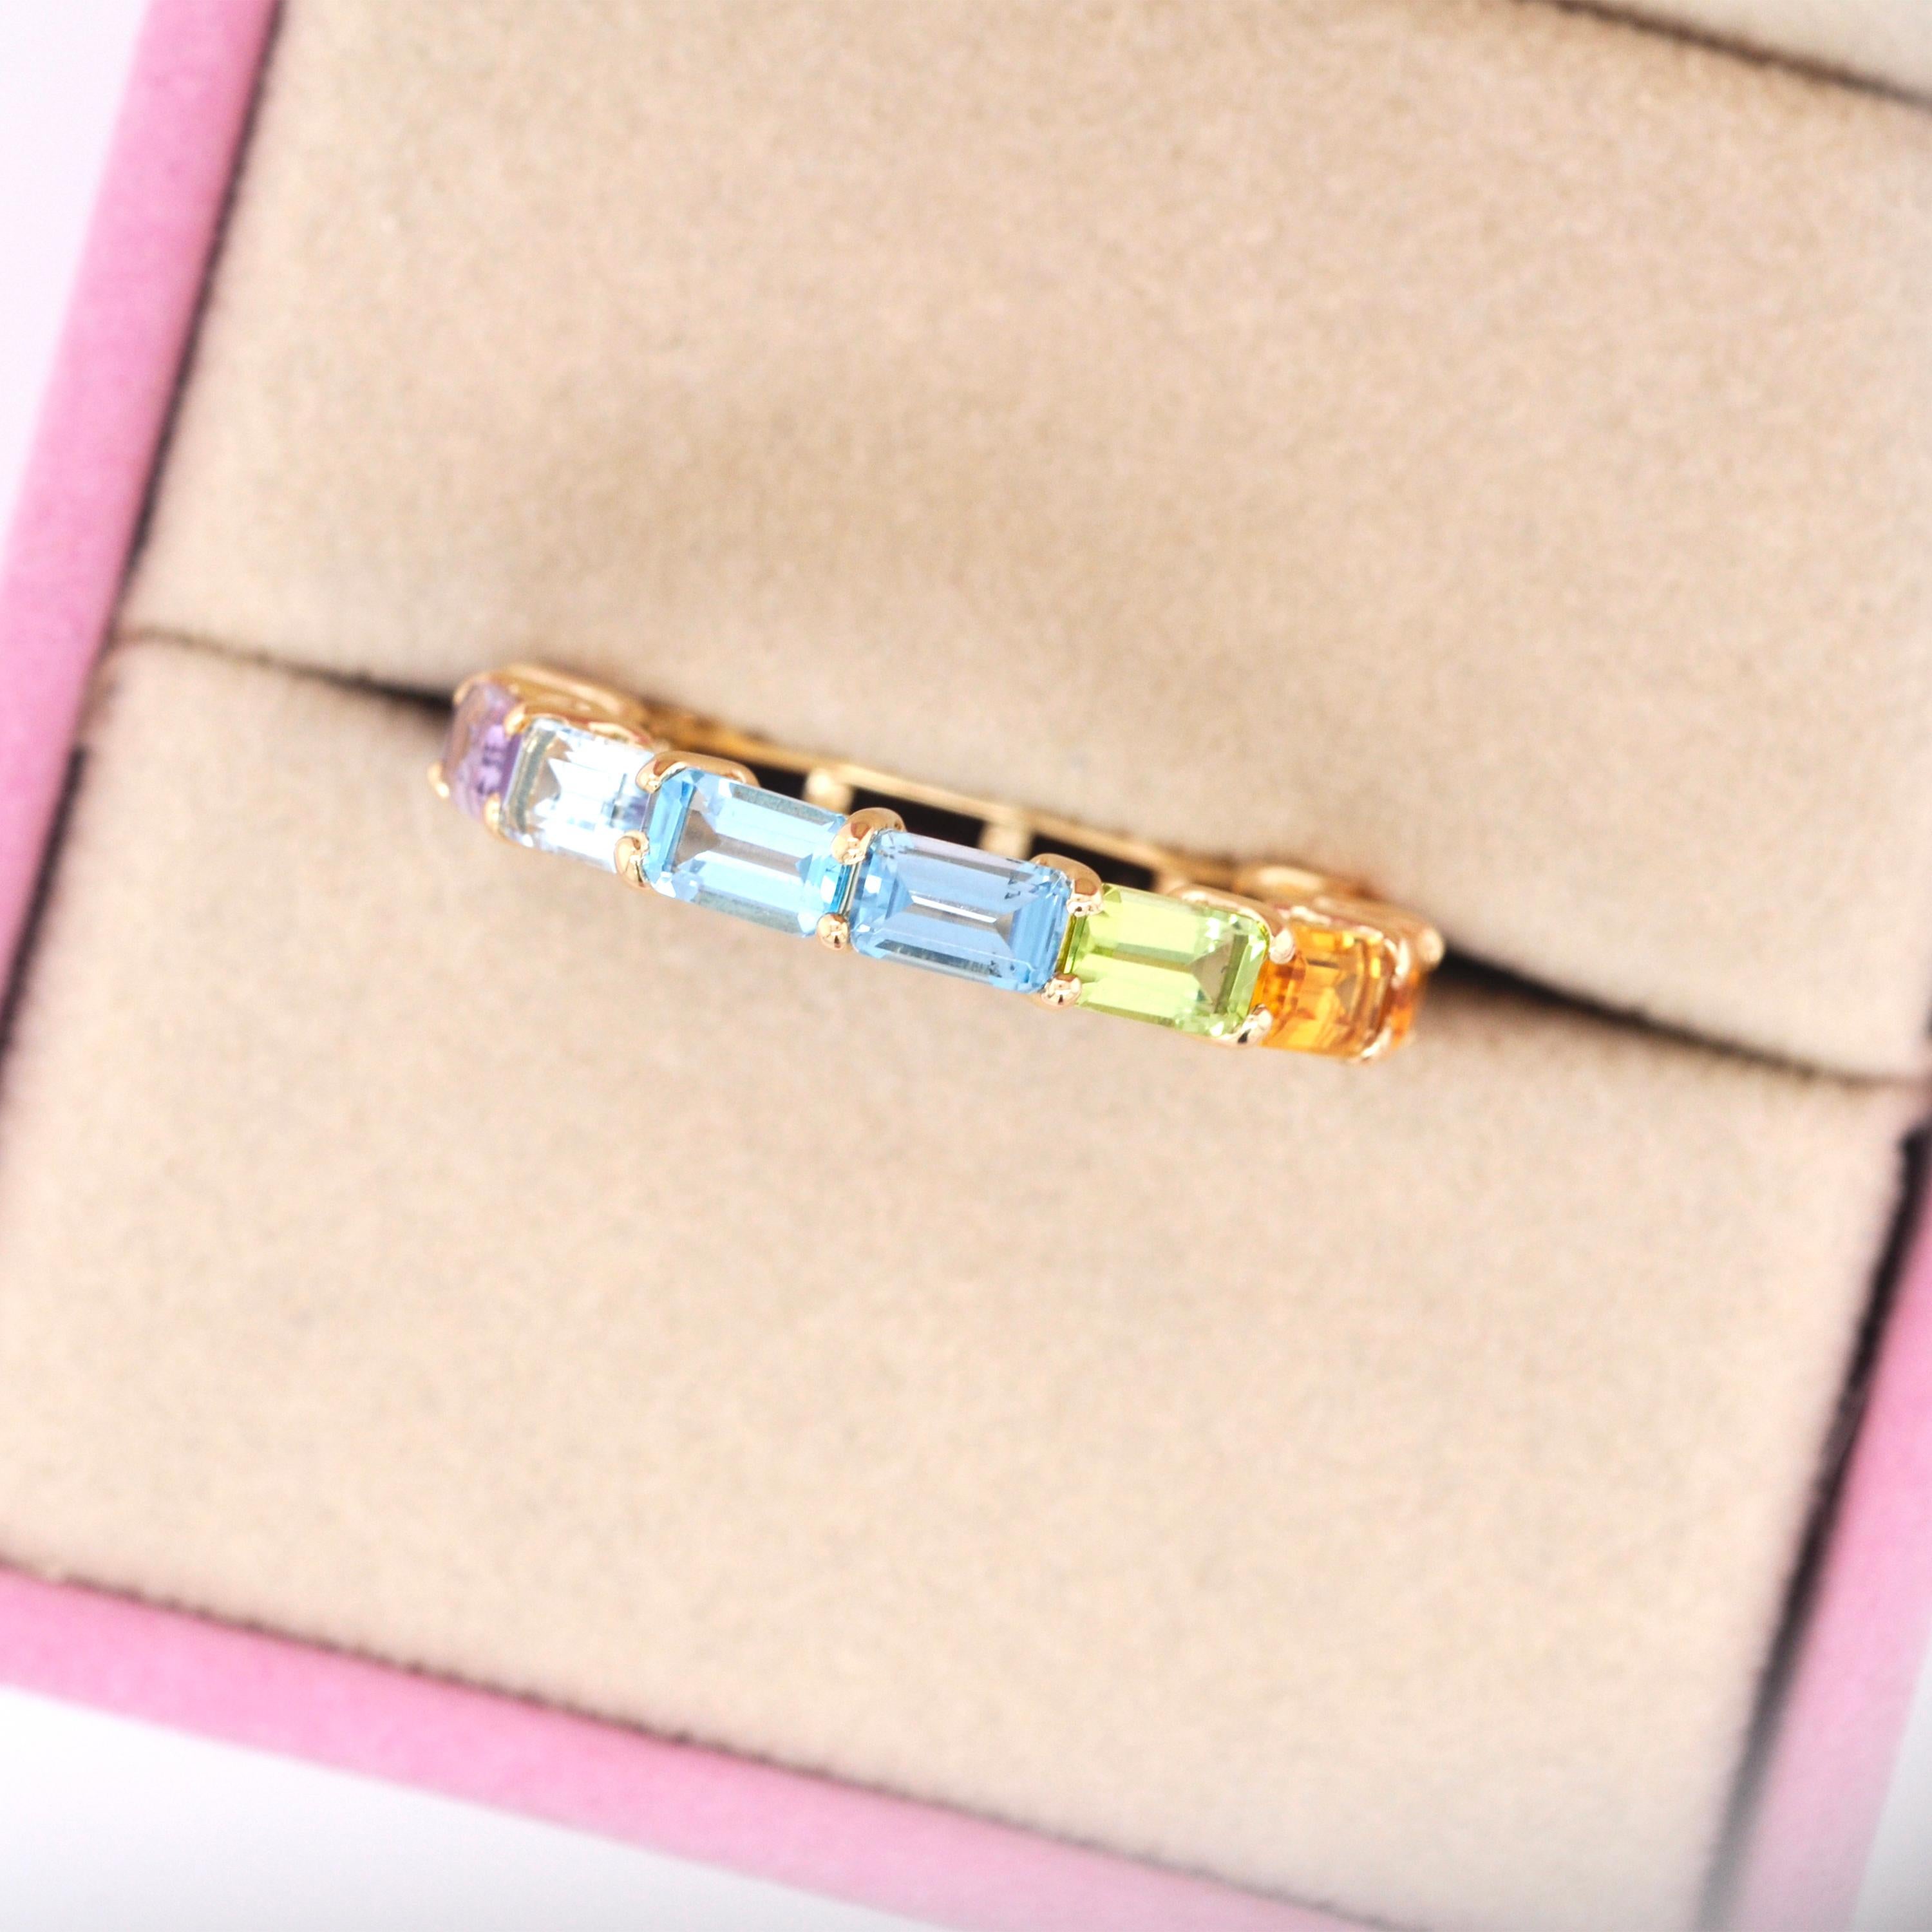 En vente :  Anneau d'éternité en or 18 carats serti de pierres précieuses octogonales multicolores arc-en-ciel 6